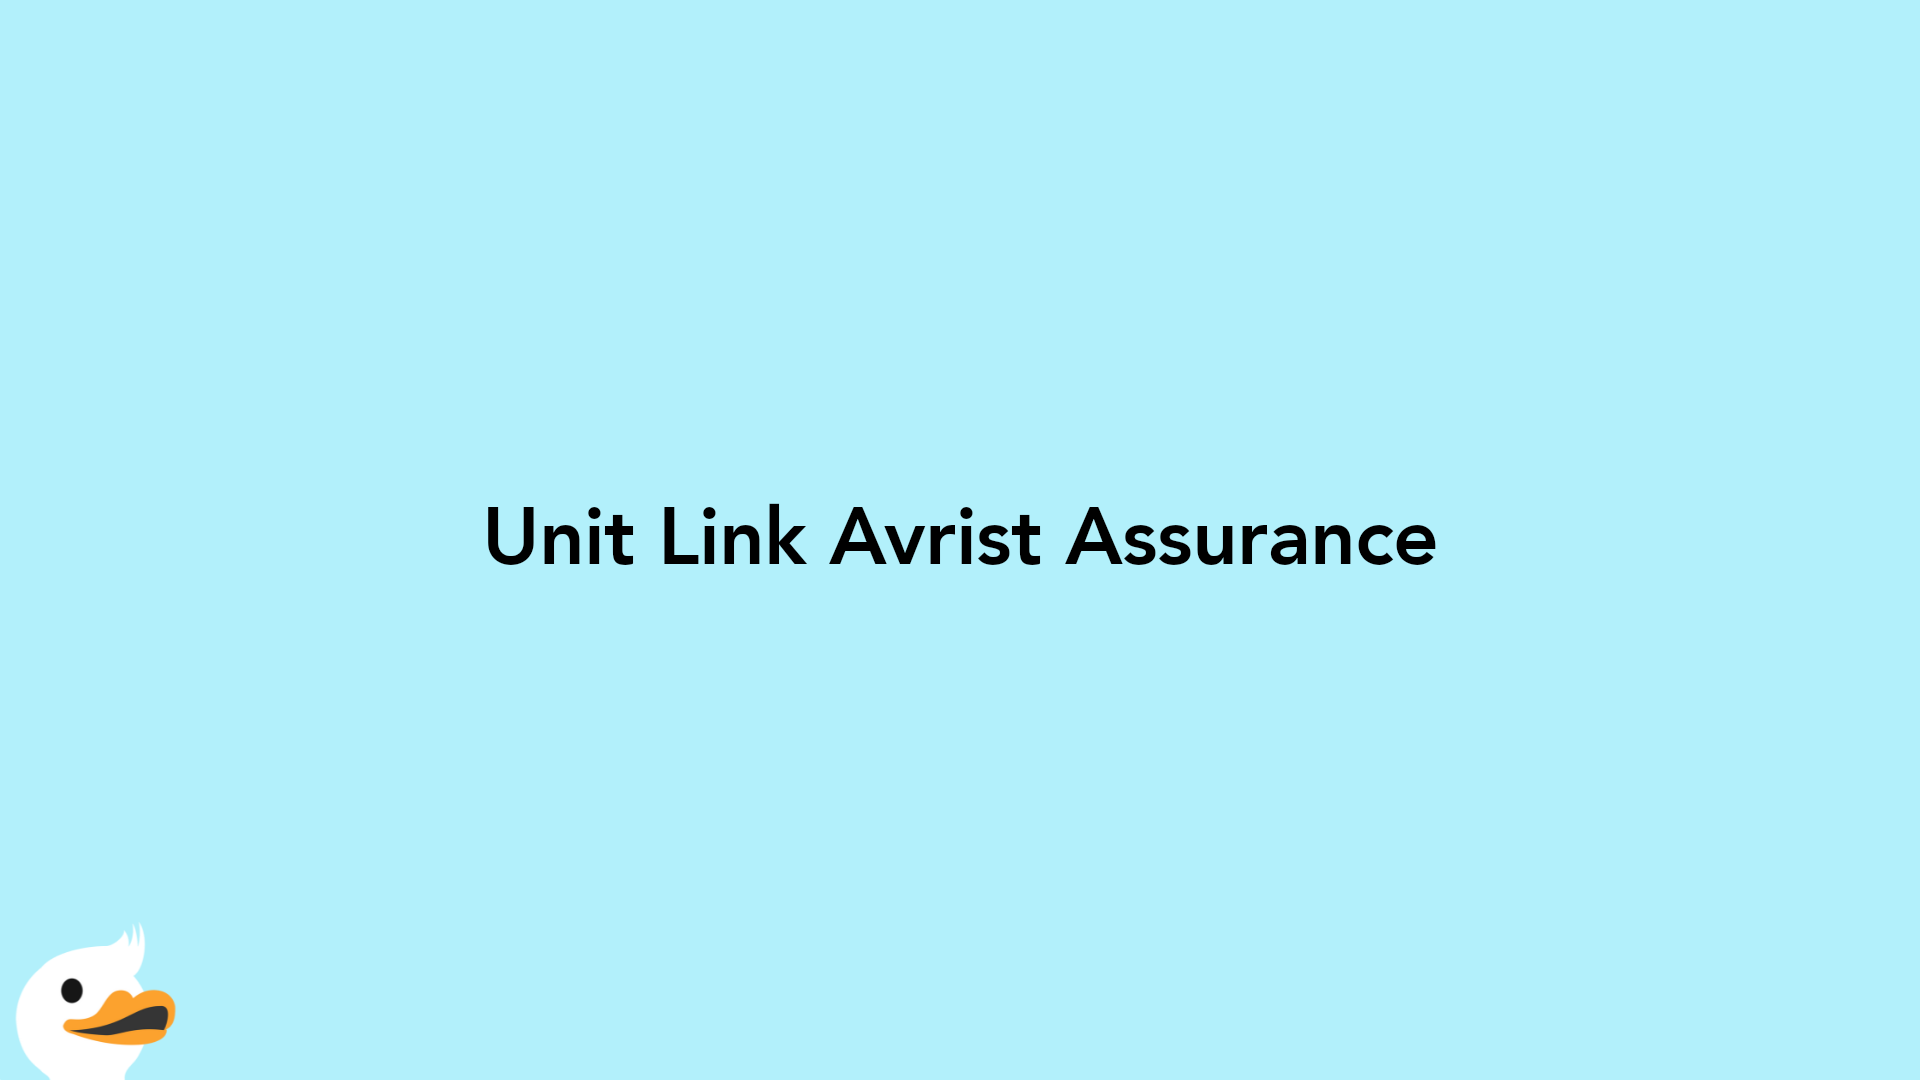 Unit Link Avrist Assurance